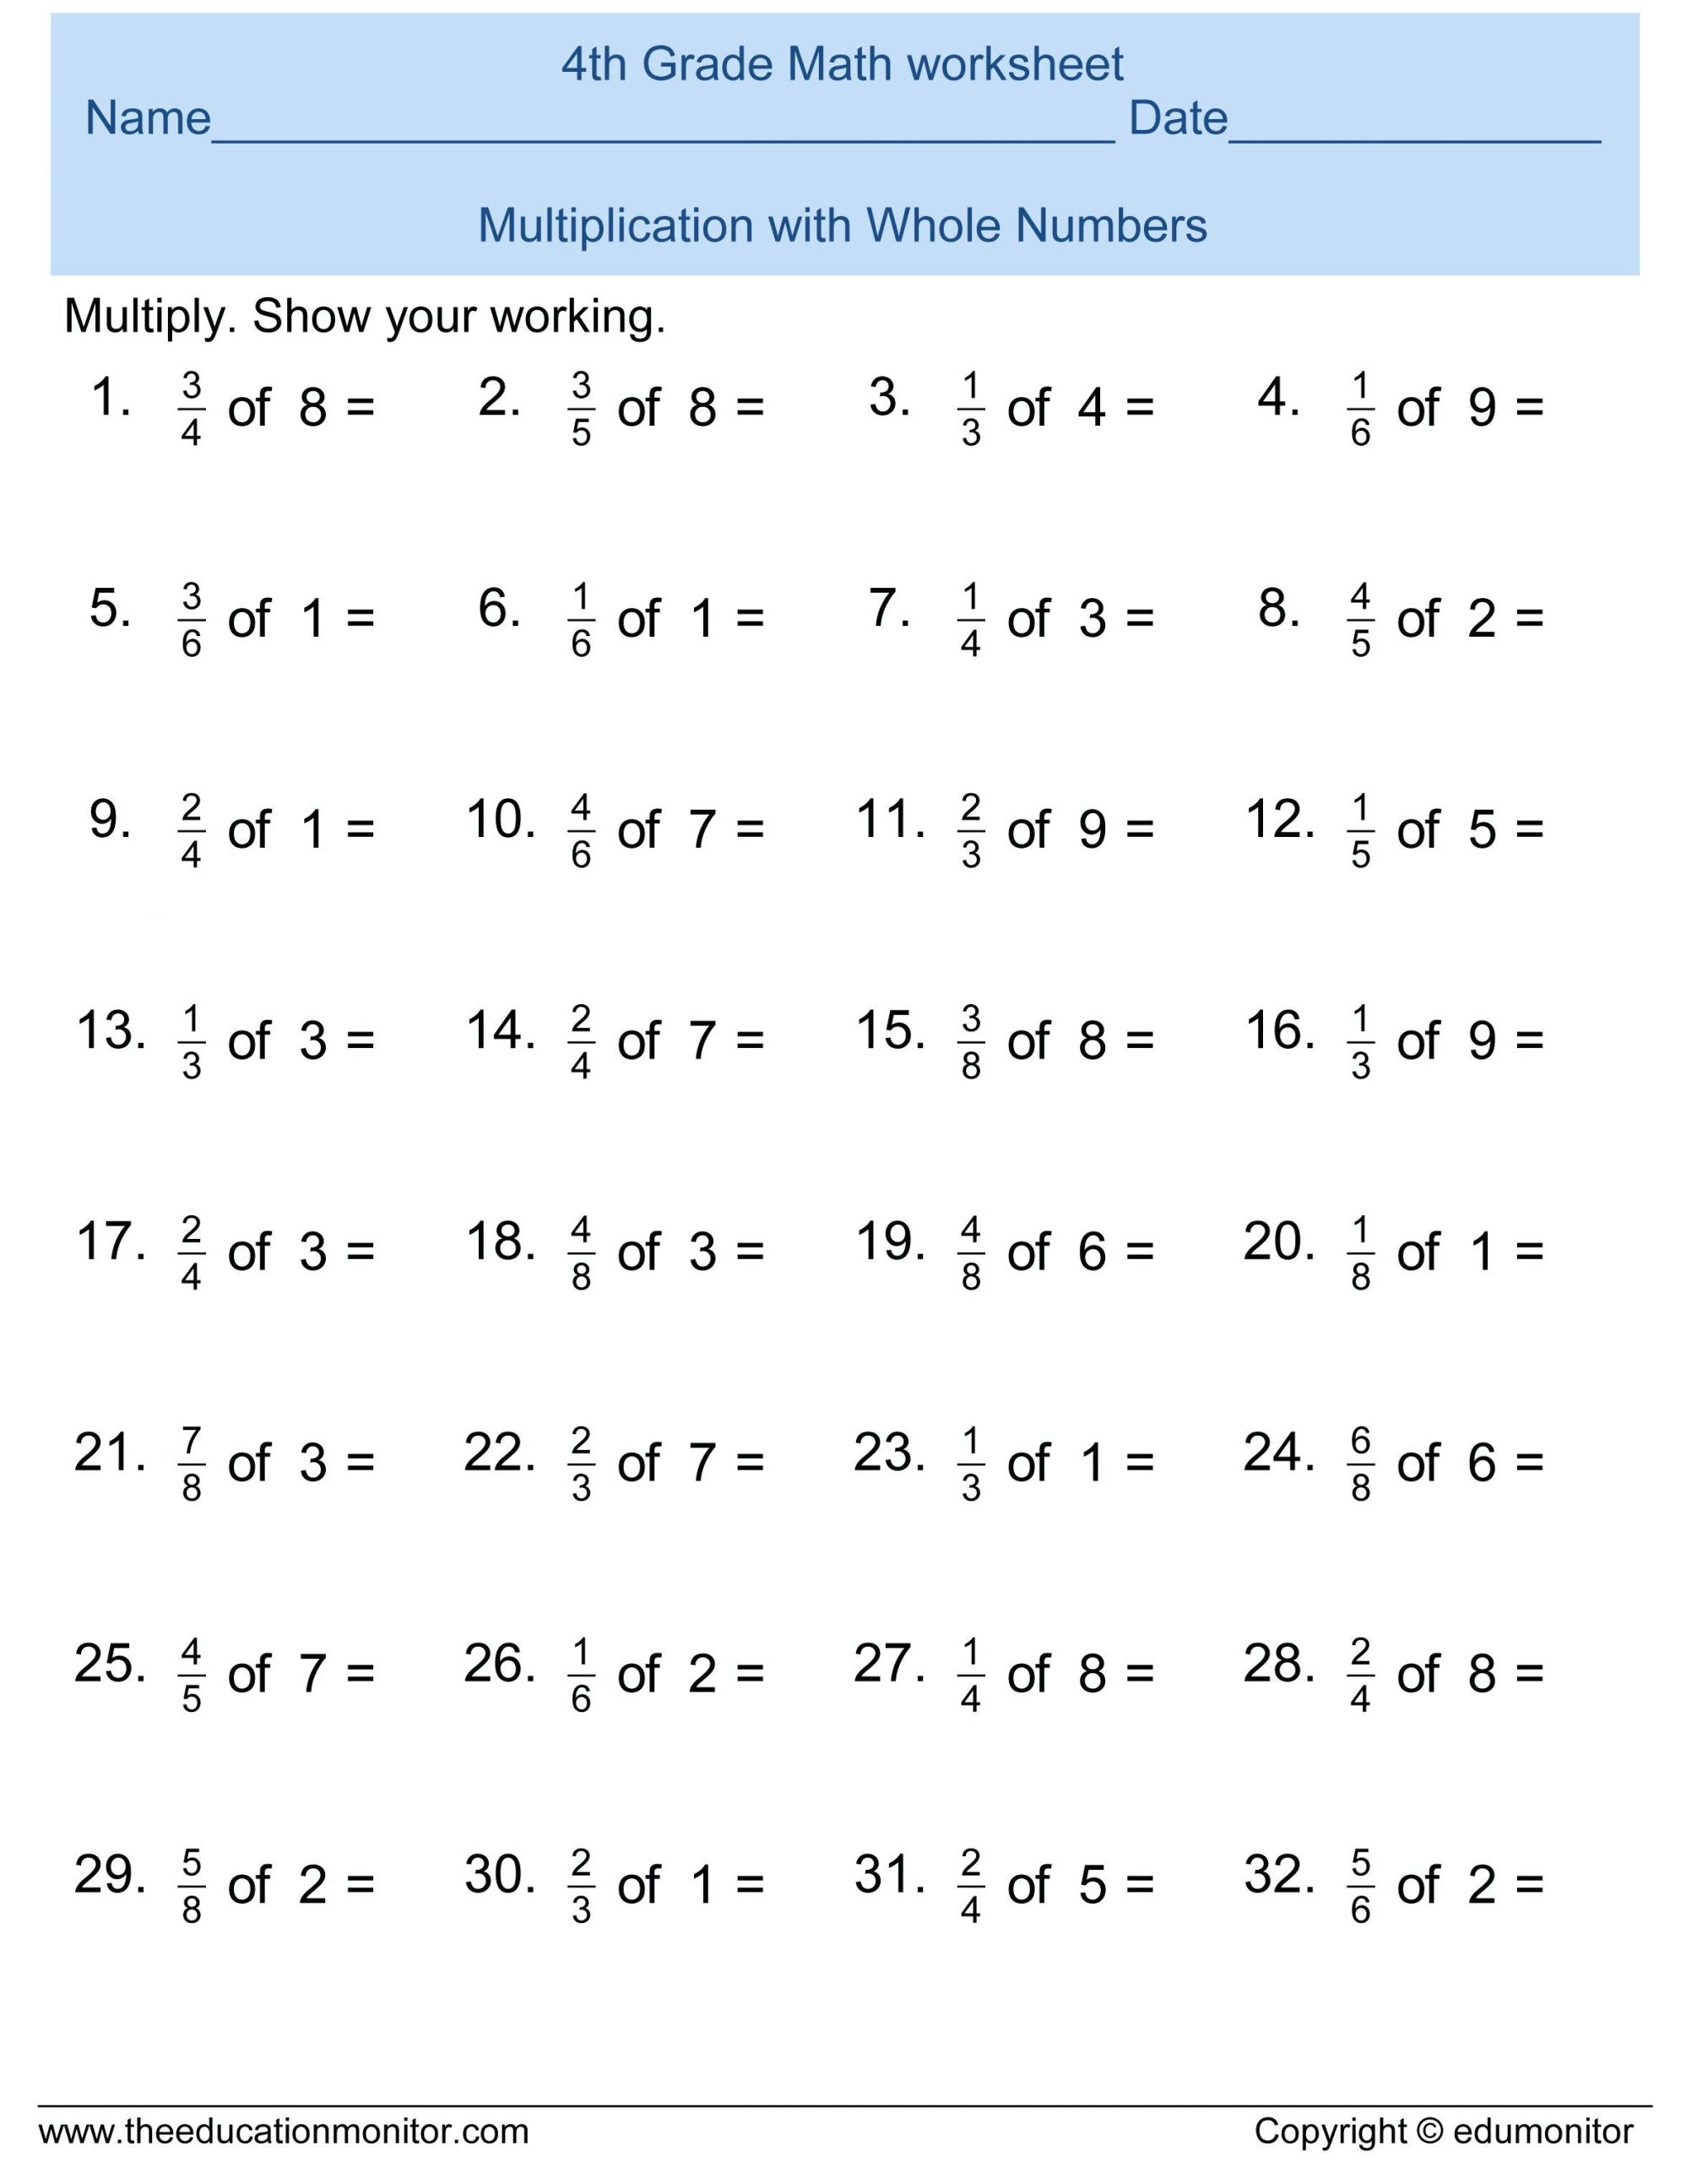 Free Math Worksheets Second Grade 2 Multiplication Multiplication Table 5 10